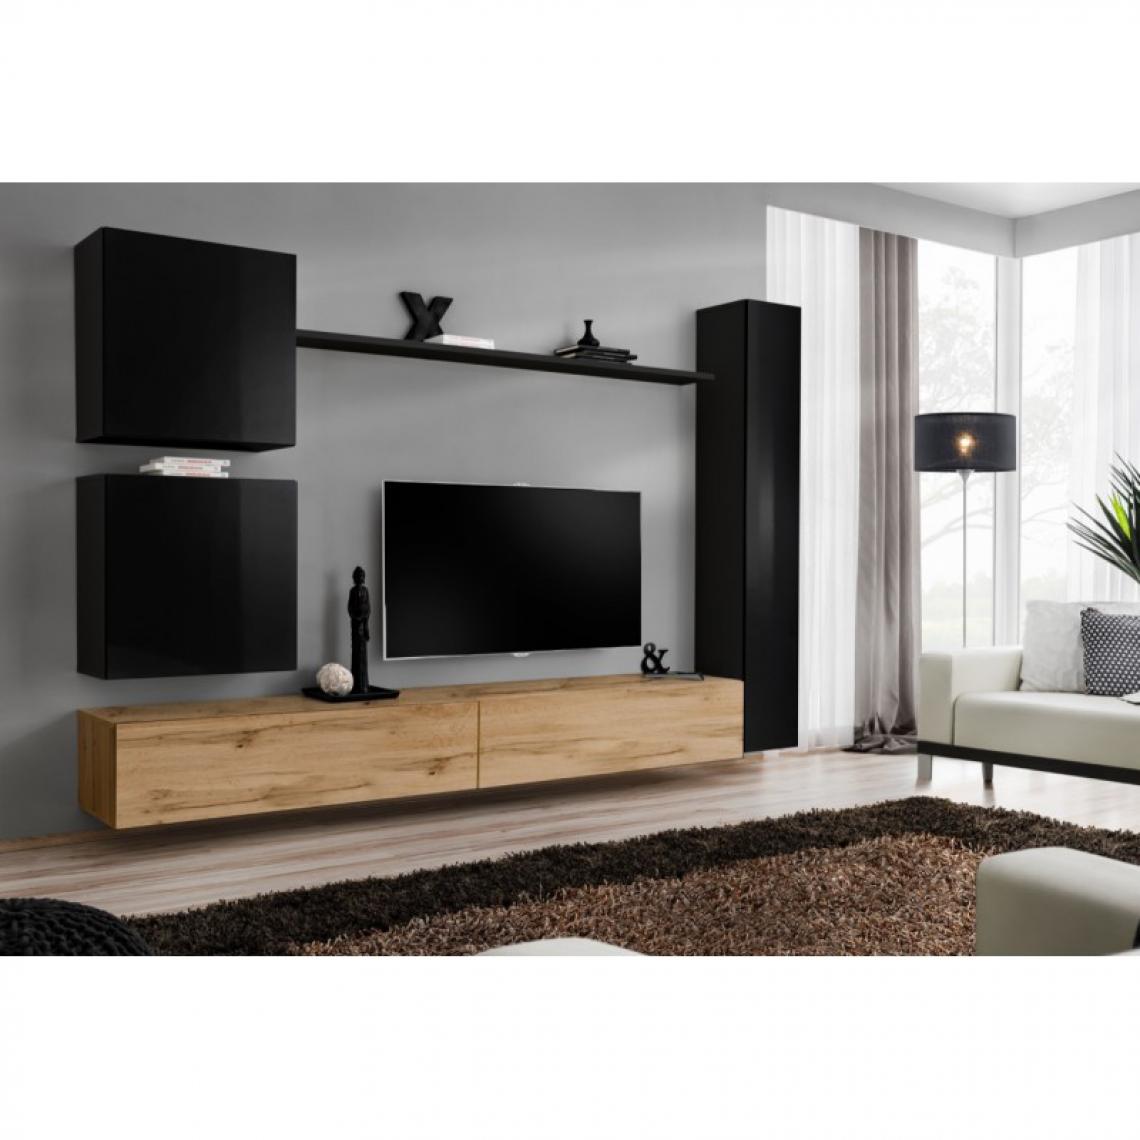 Ac-Deco - Meuble TV Mural Design Switch VIII 280cm Noir & Naturel - Meubles TV, Hi-Fi